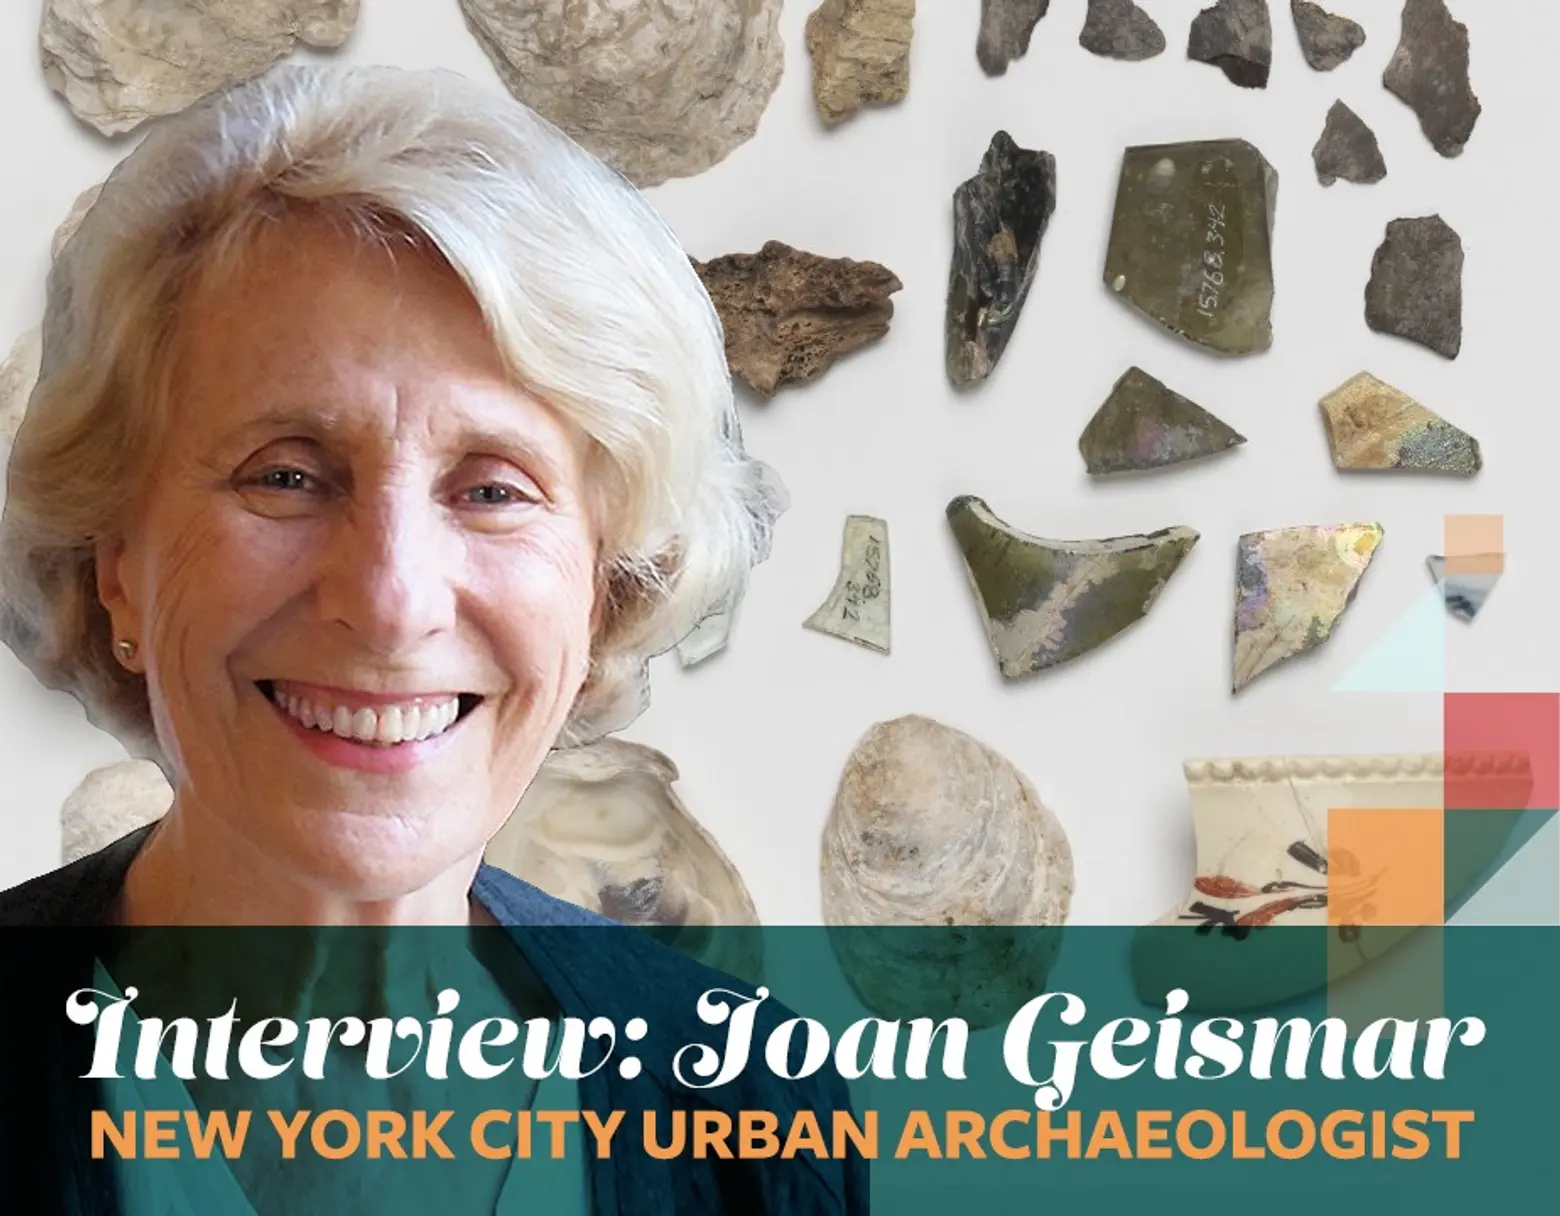 INTERVIEW: Urban archaeologist Joan Geismar on the artifacts she’s dug up across New York